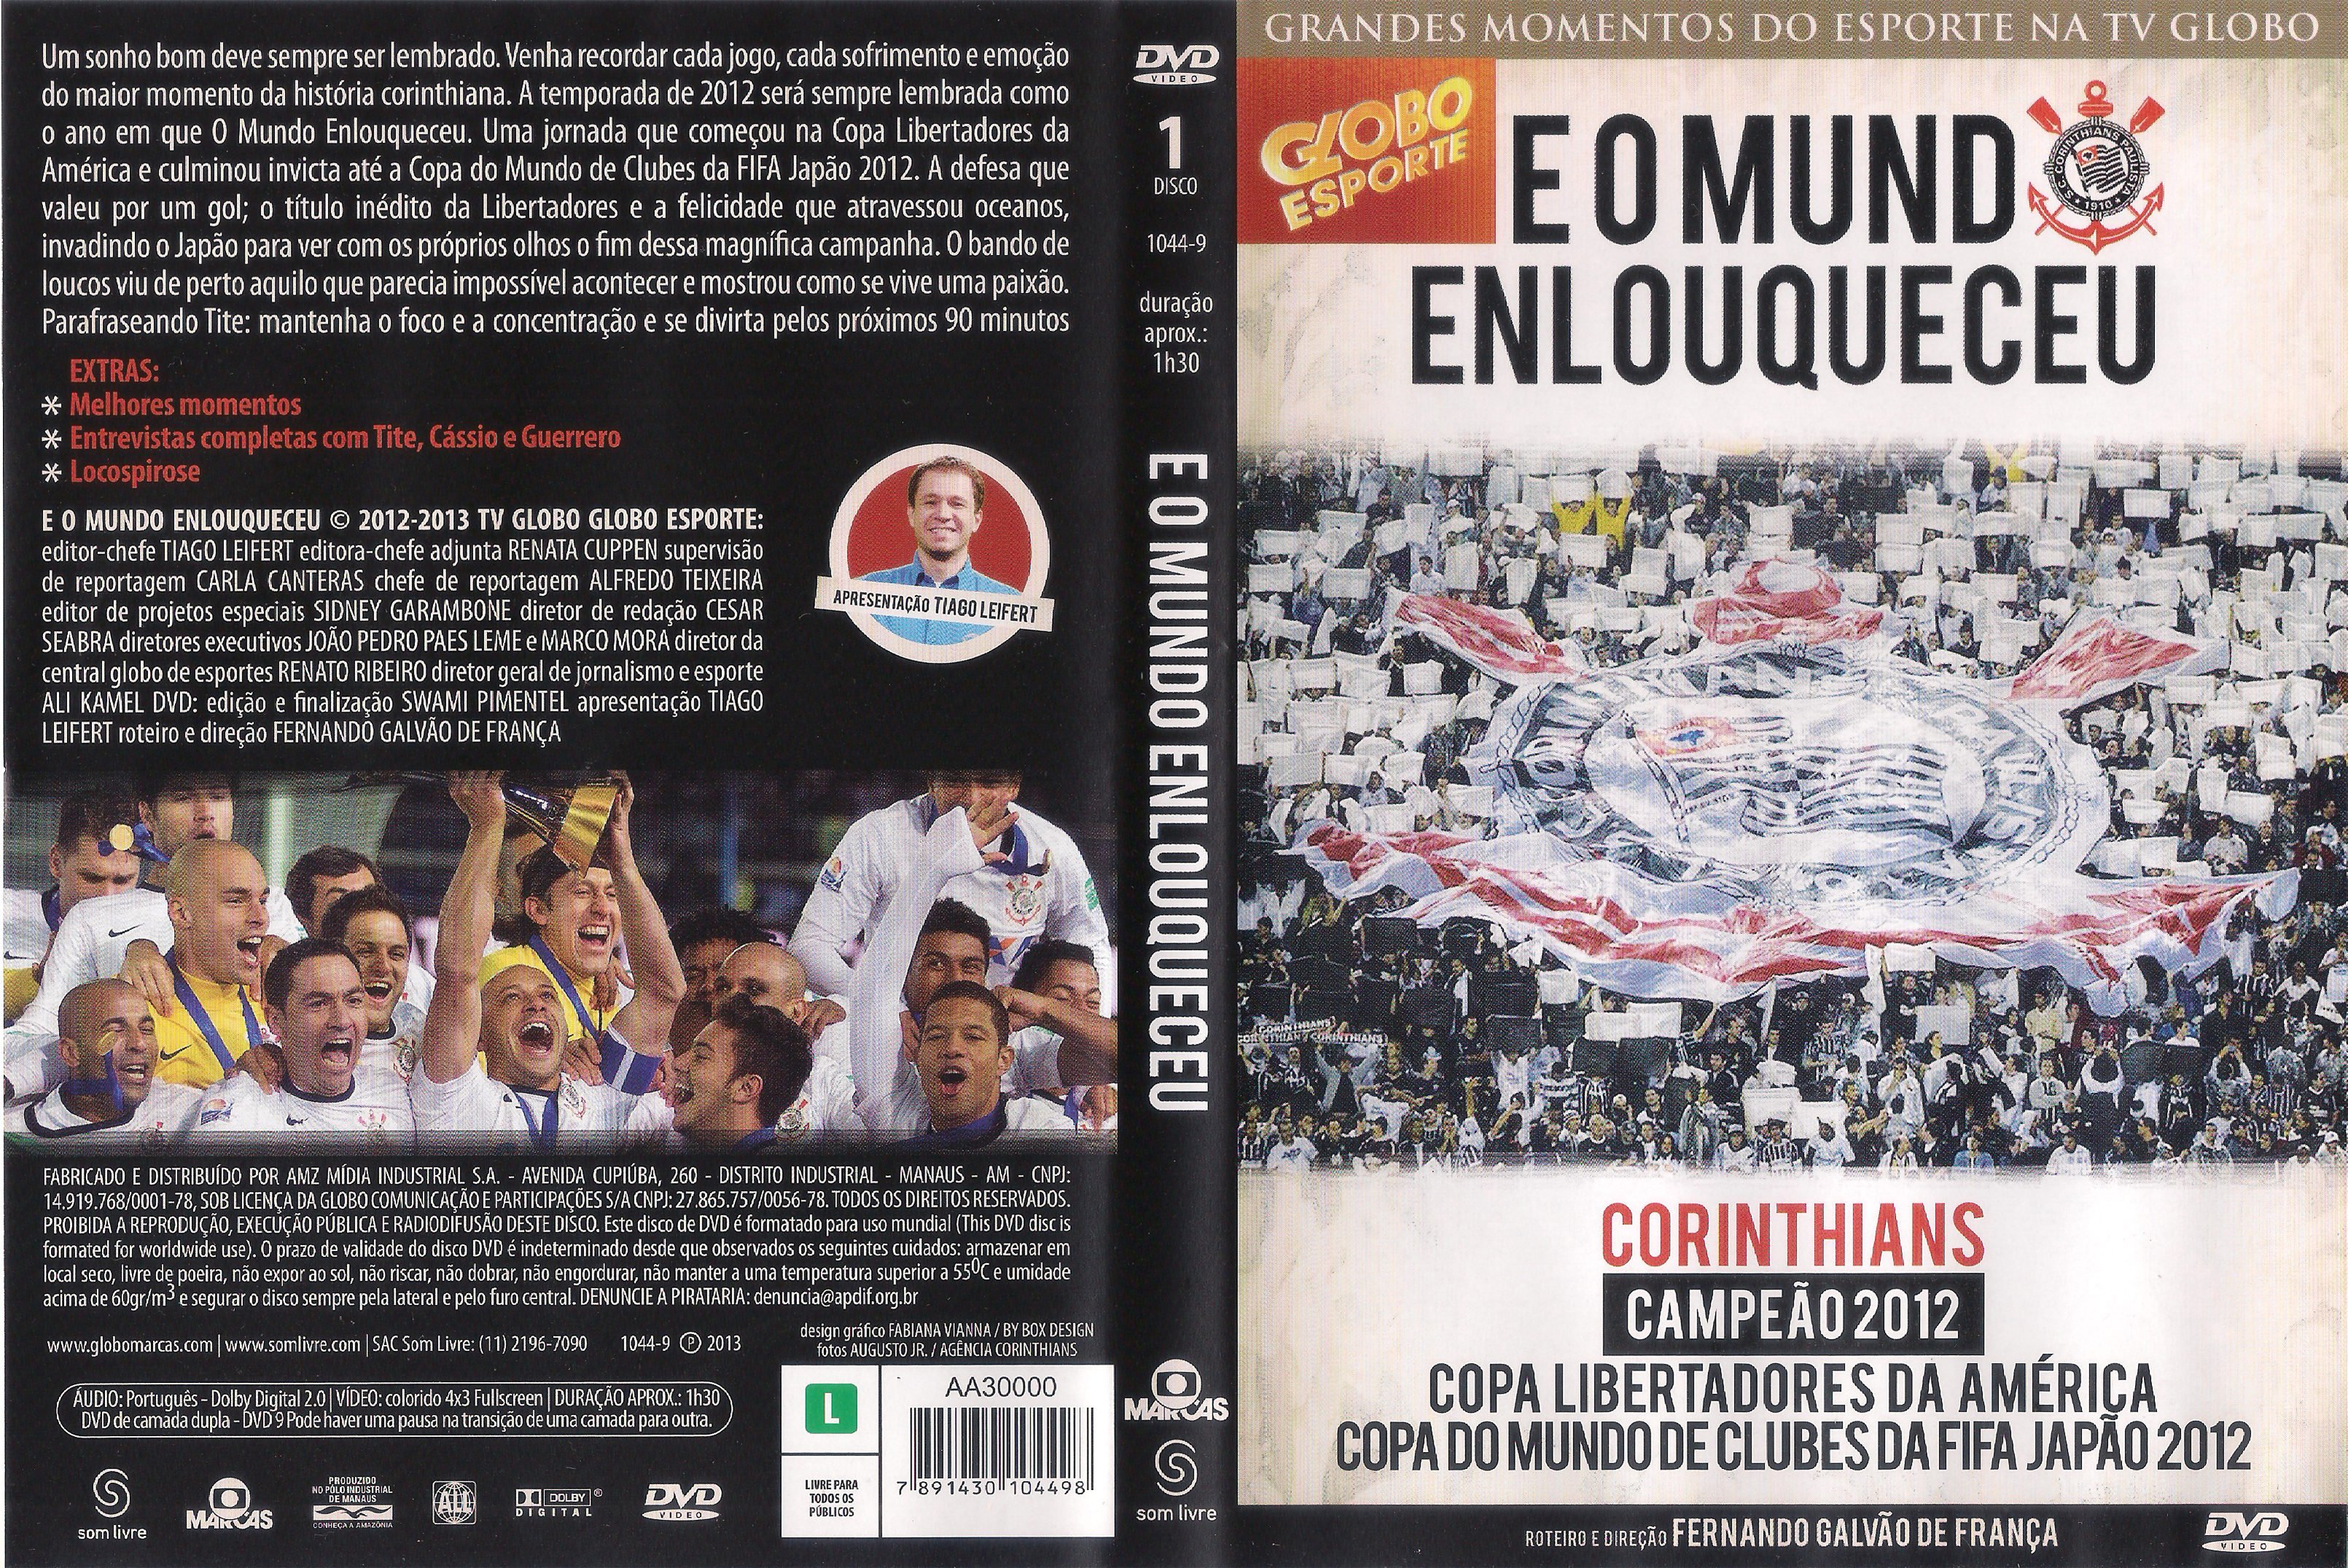 CorinthiansEoMundoEnlouqueceu